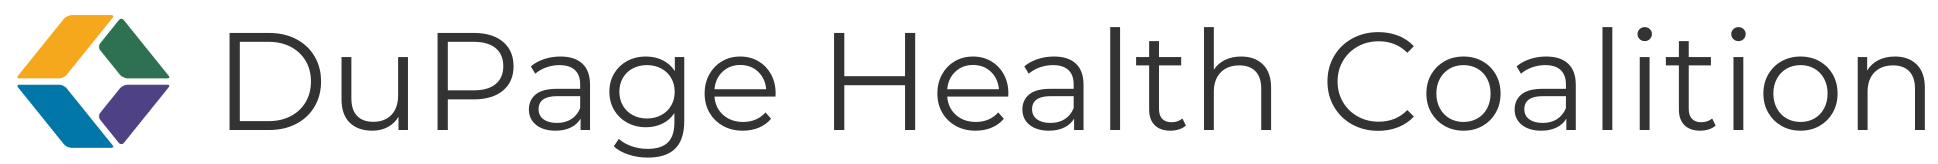 DuPage Health Coalition Logo အလျားလိုက်